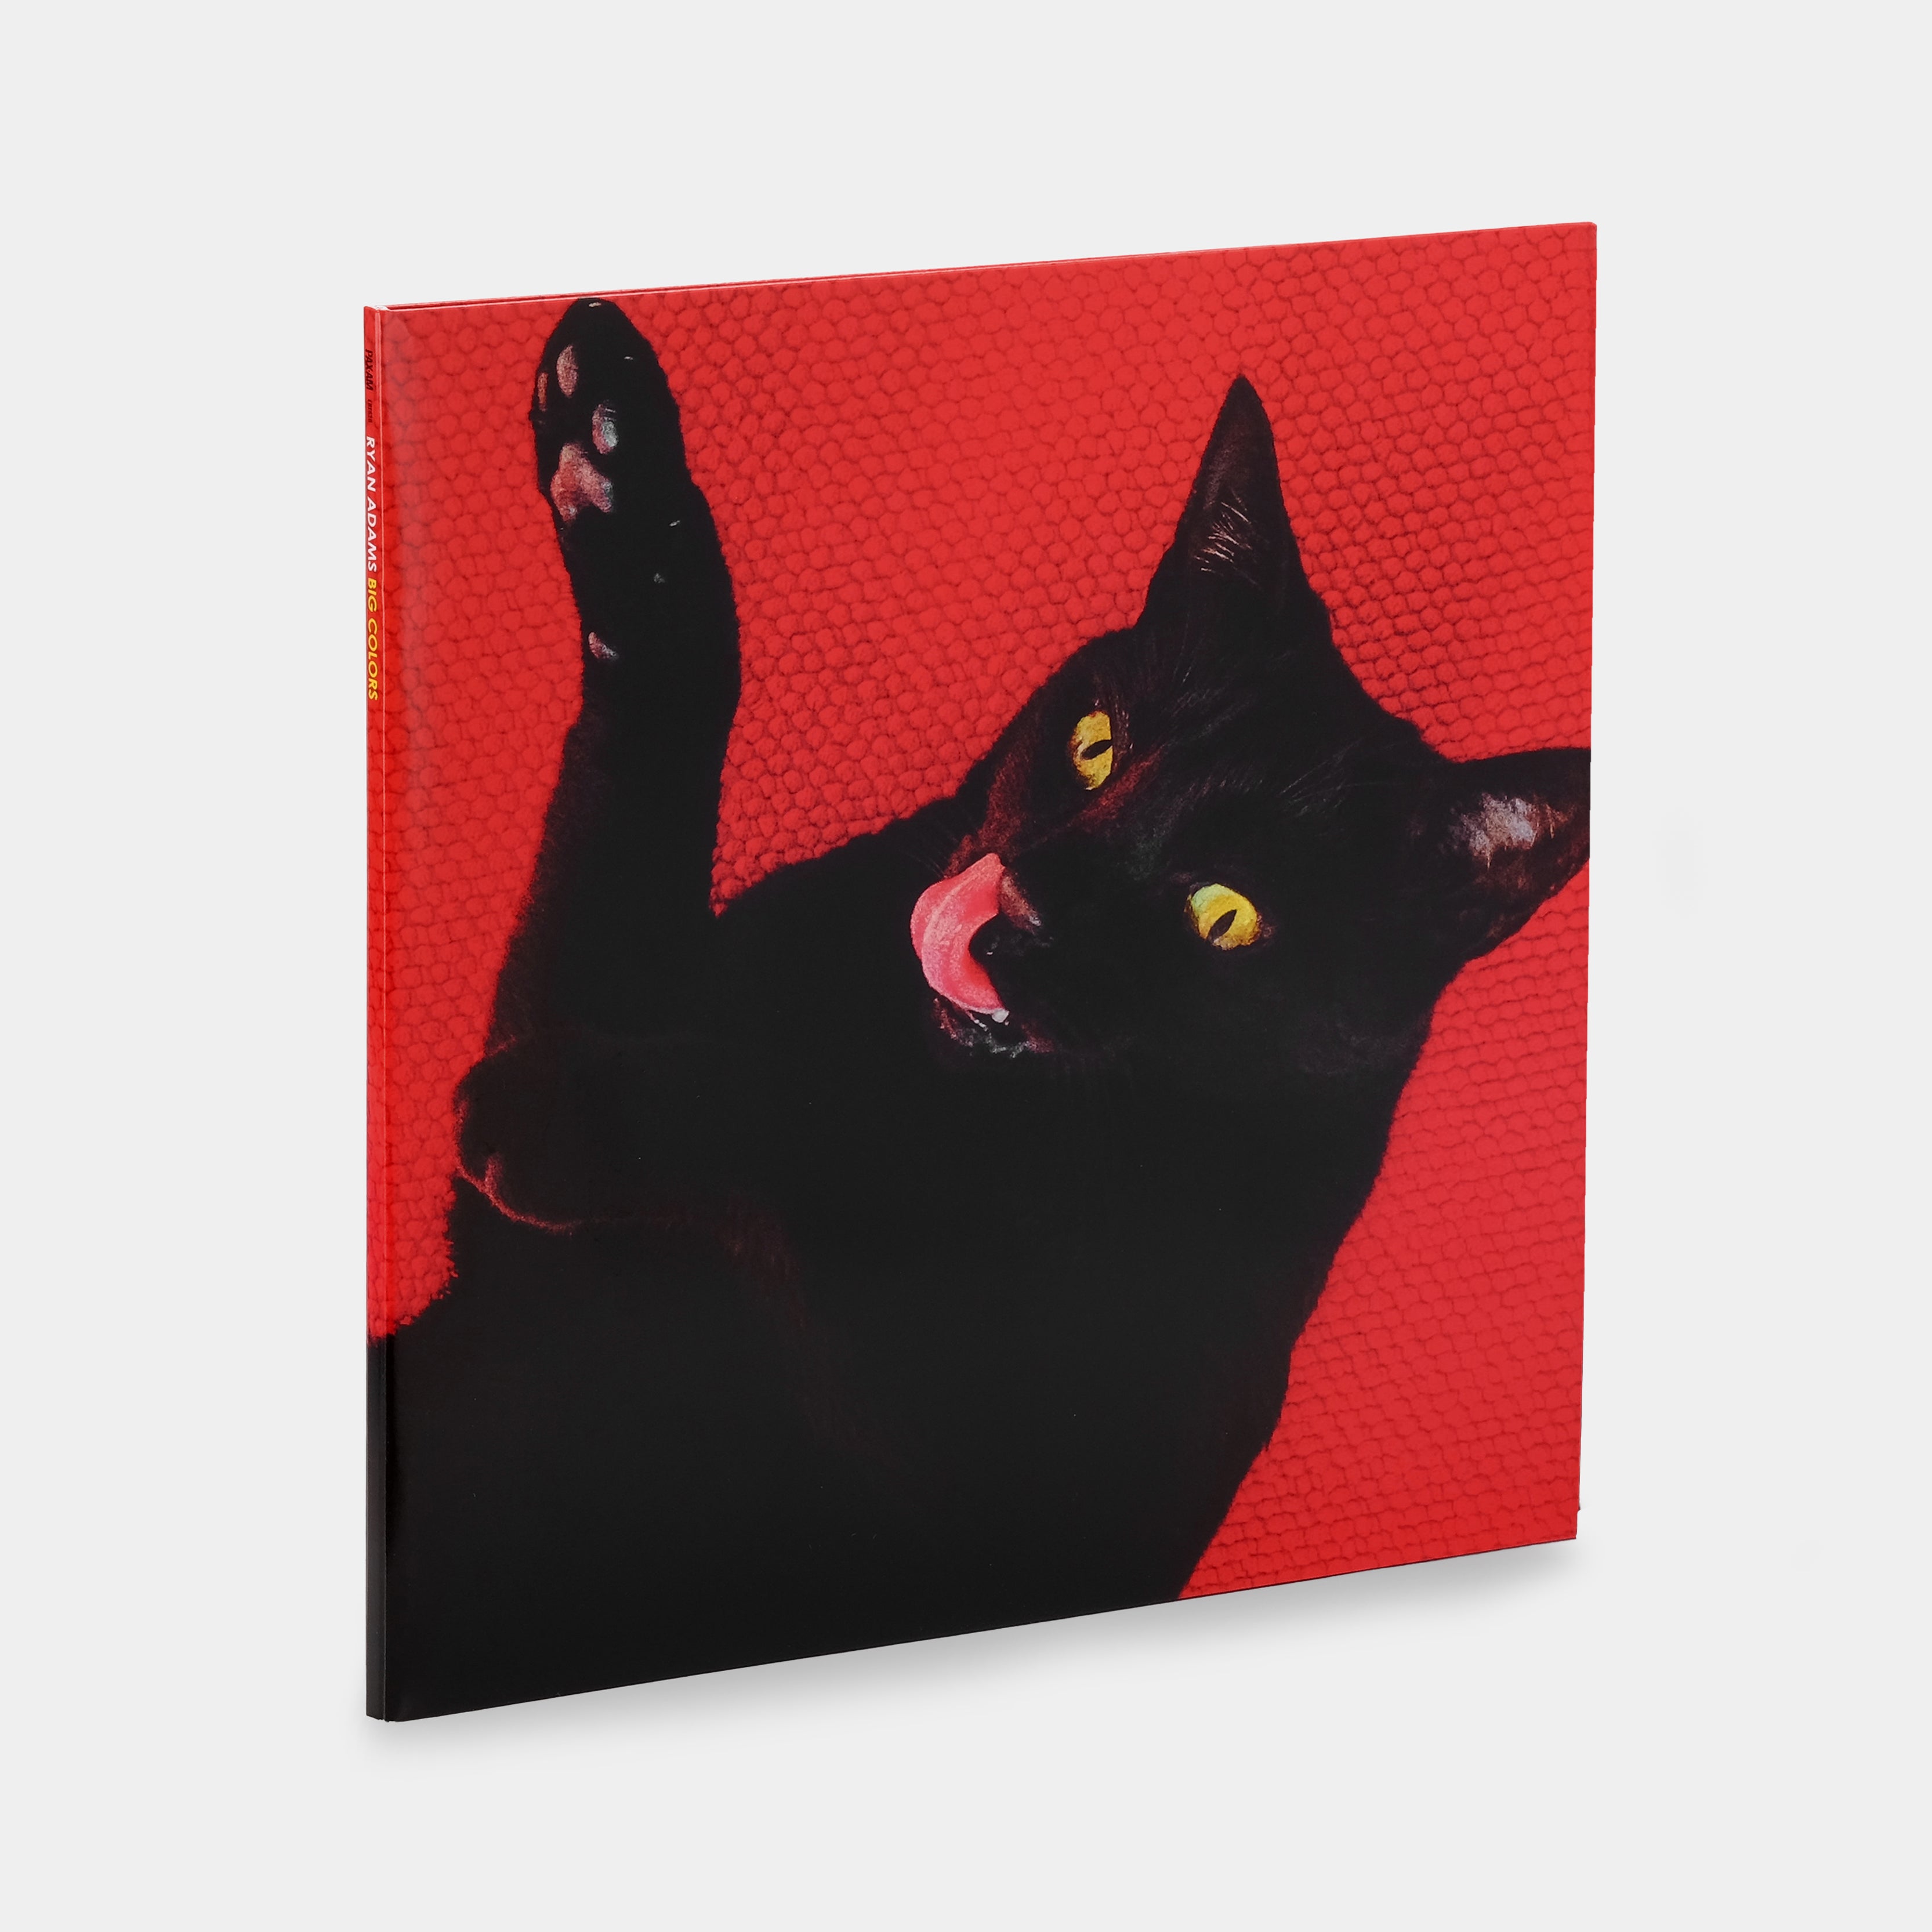 Ryan Adams - Big Colors LP Red Vinyl Record + 7" Single